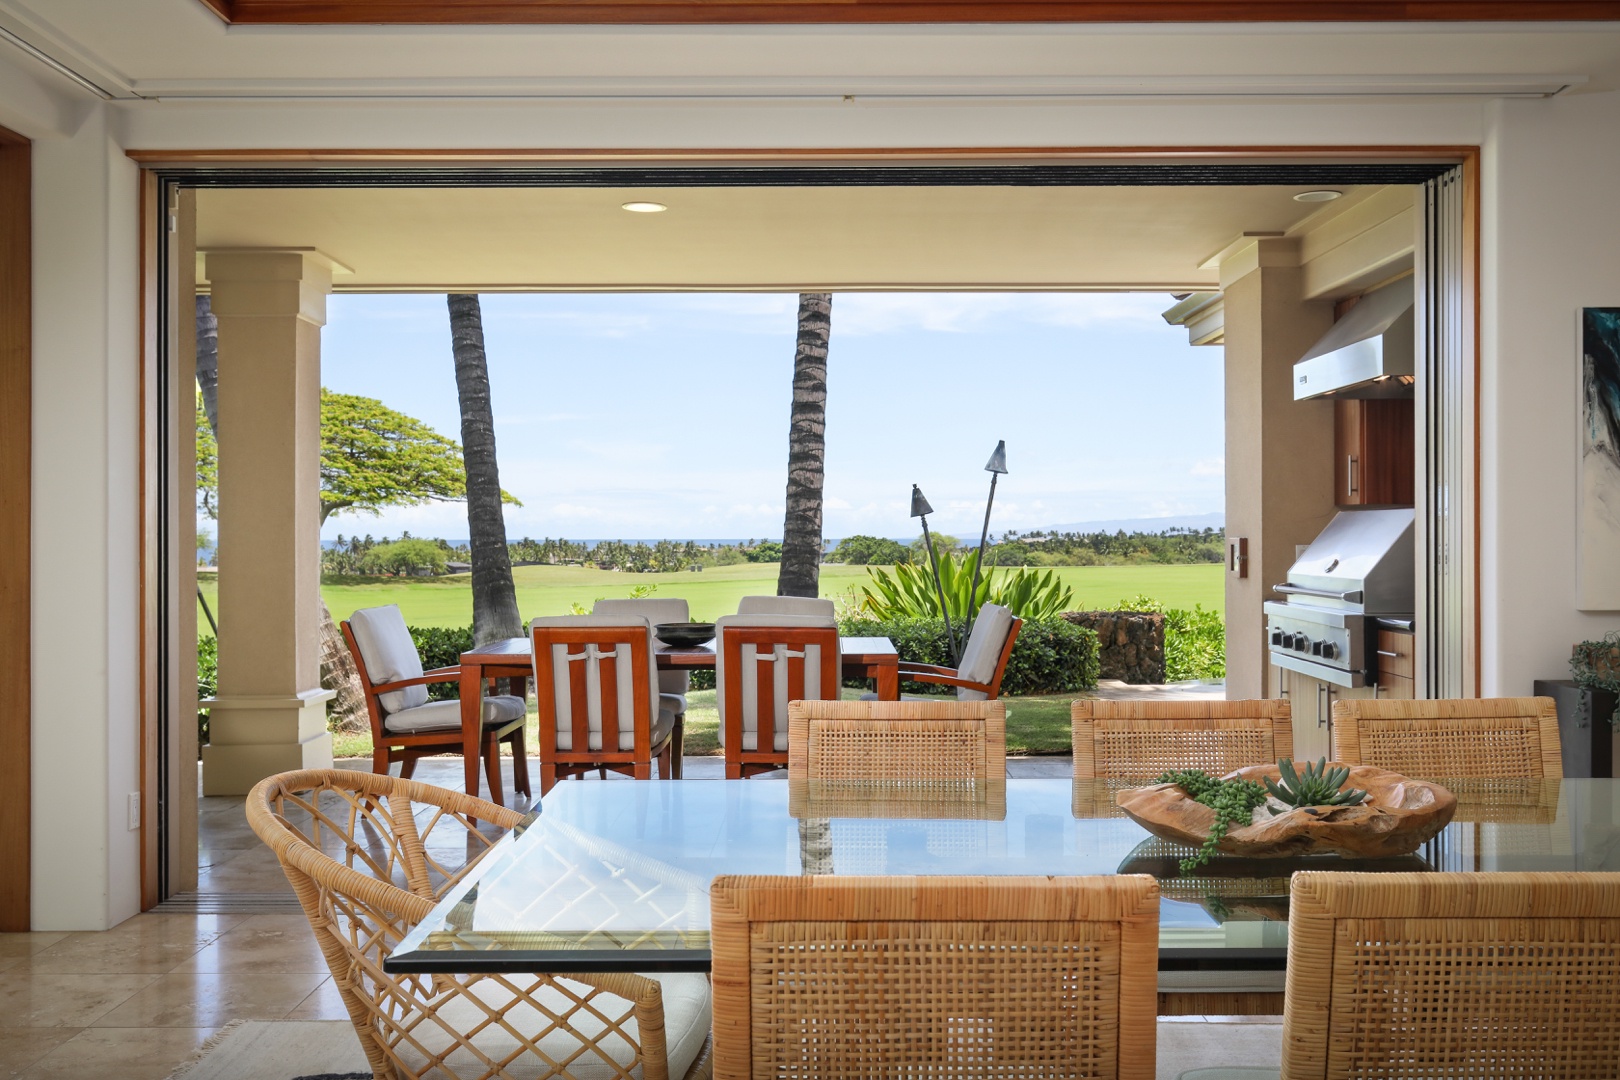 Kailua Kona Vacation Rentals, 4BD Pakui Street (147) Estate Home at Four Seasons Resort at Hualalai - View from interior dining room to outdoor lanai (deck) dining area.